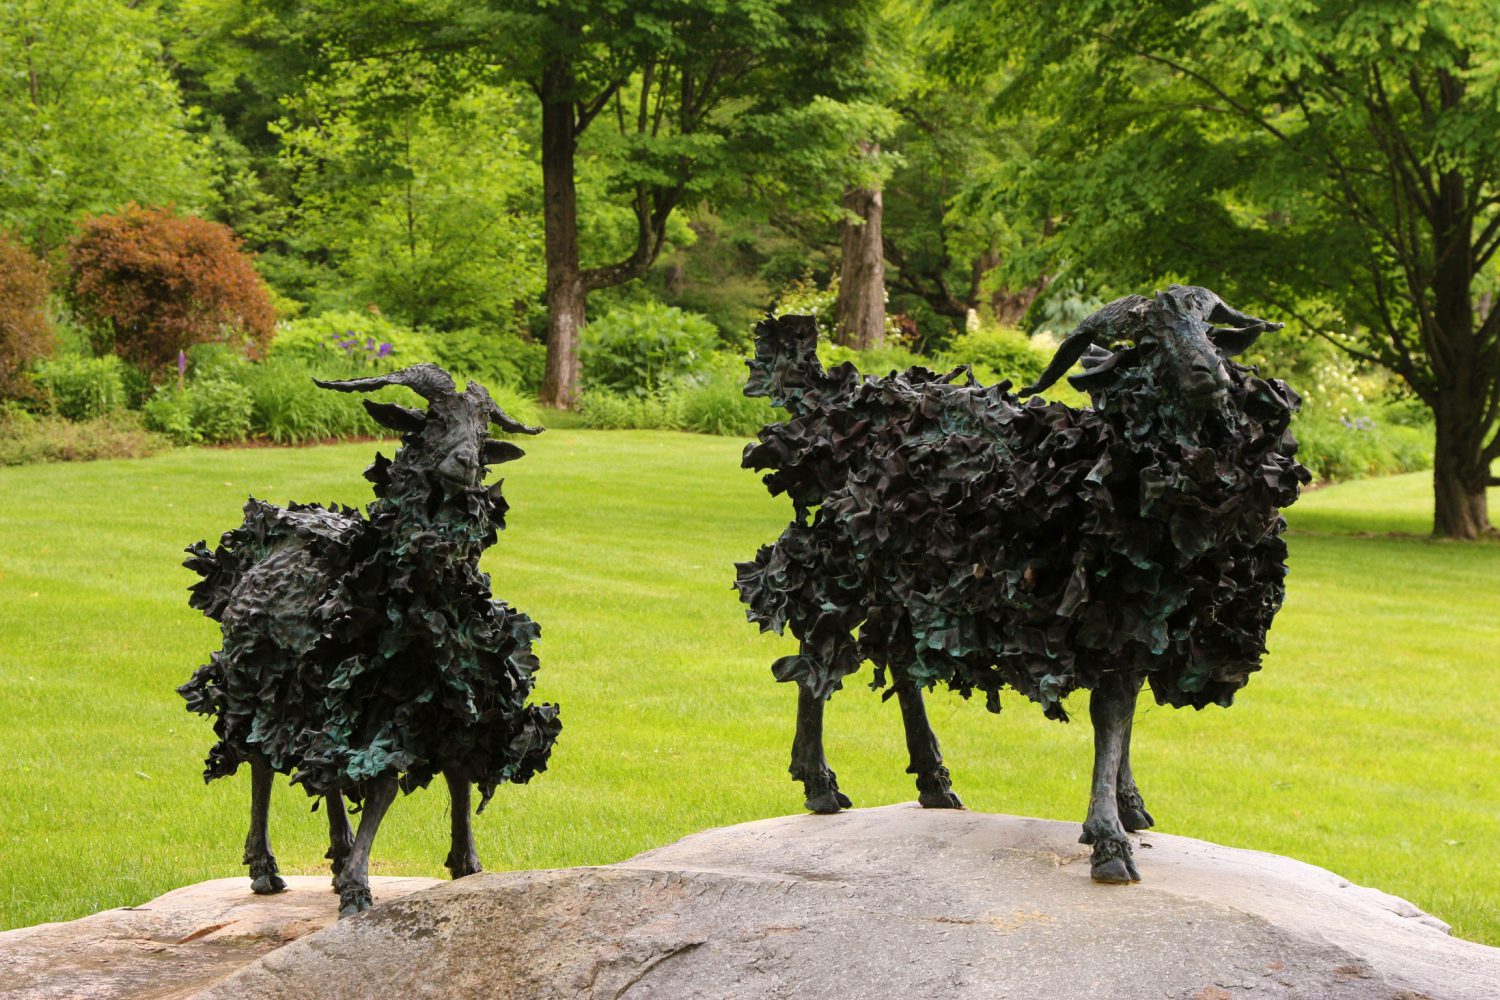 Copper and bronze goats by Connecticut artist Roger Di Taranto